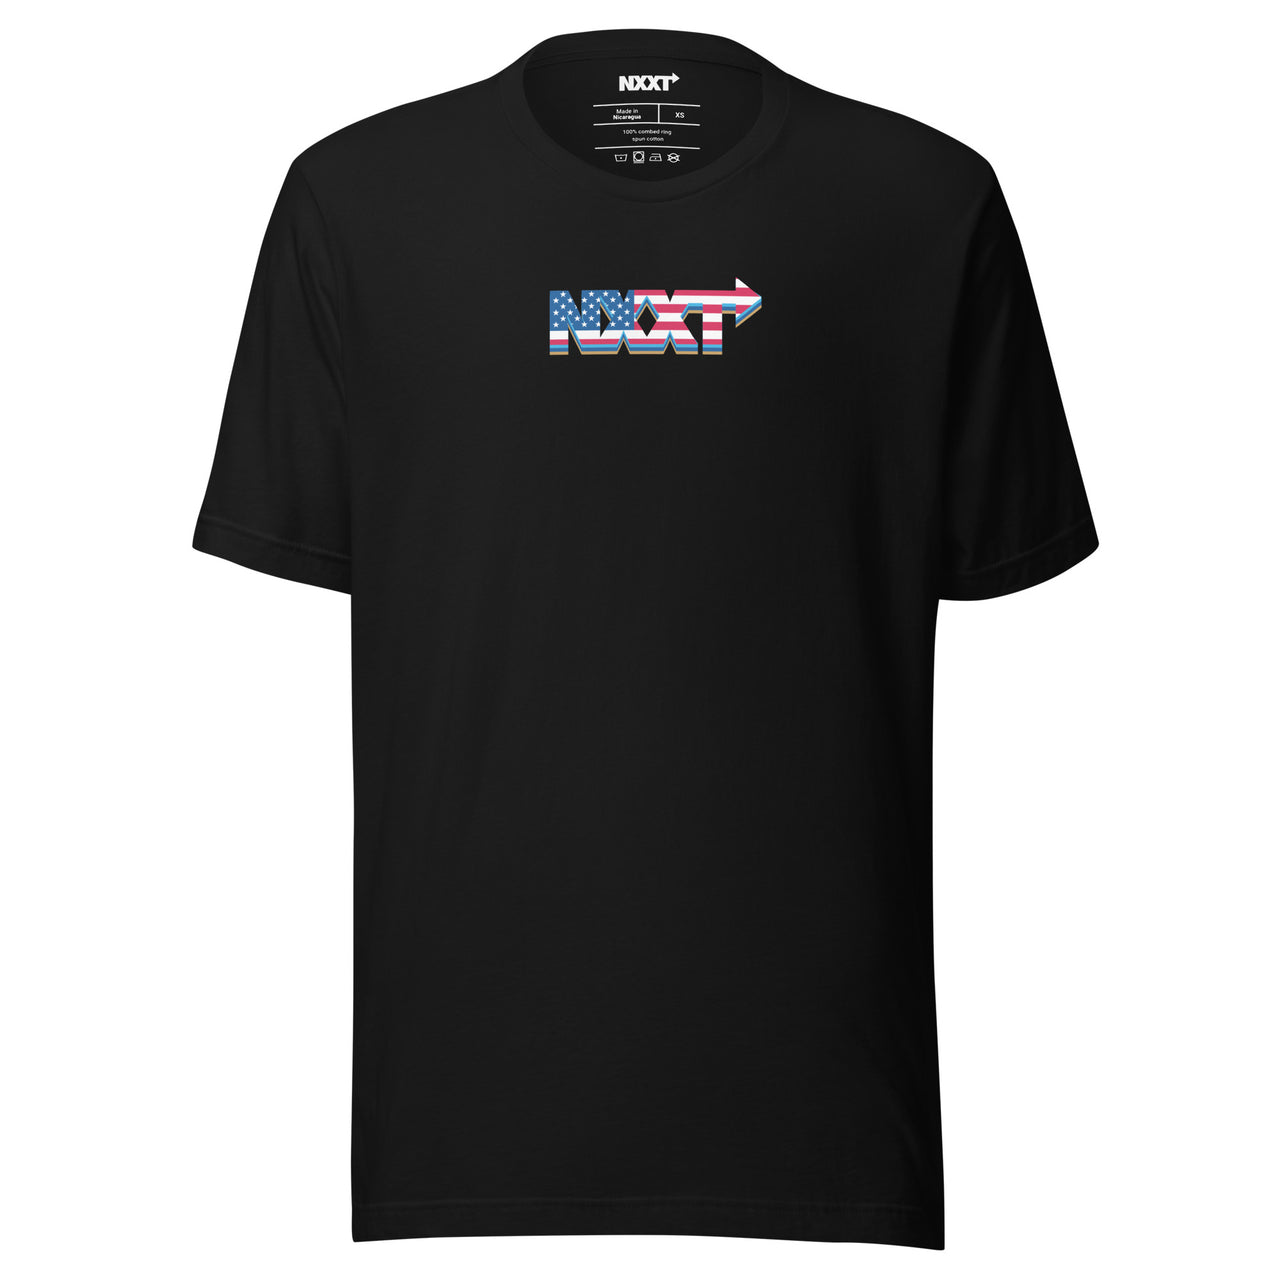 NXXT Freedom T-shirt - Shady Lion Coffee Co.